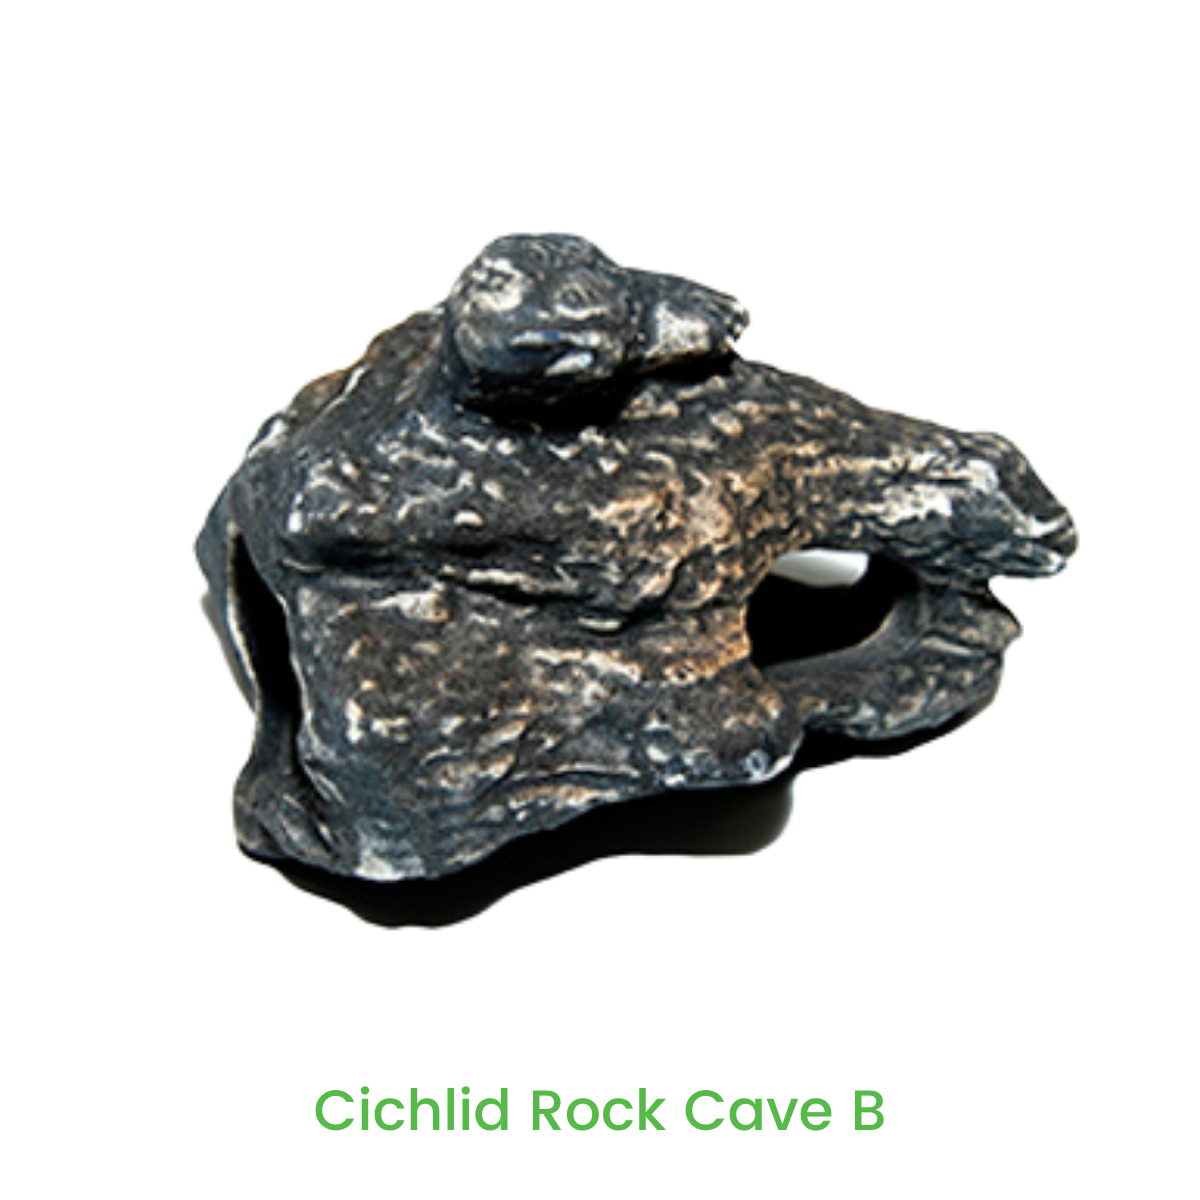 Cichlid Rock Cave B